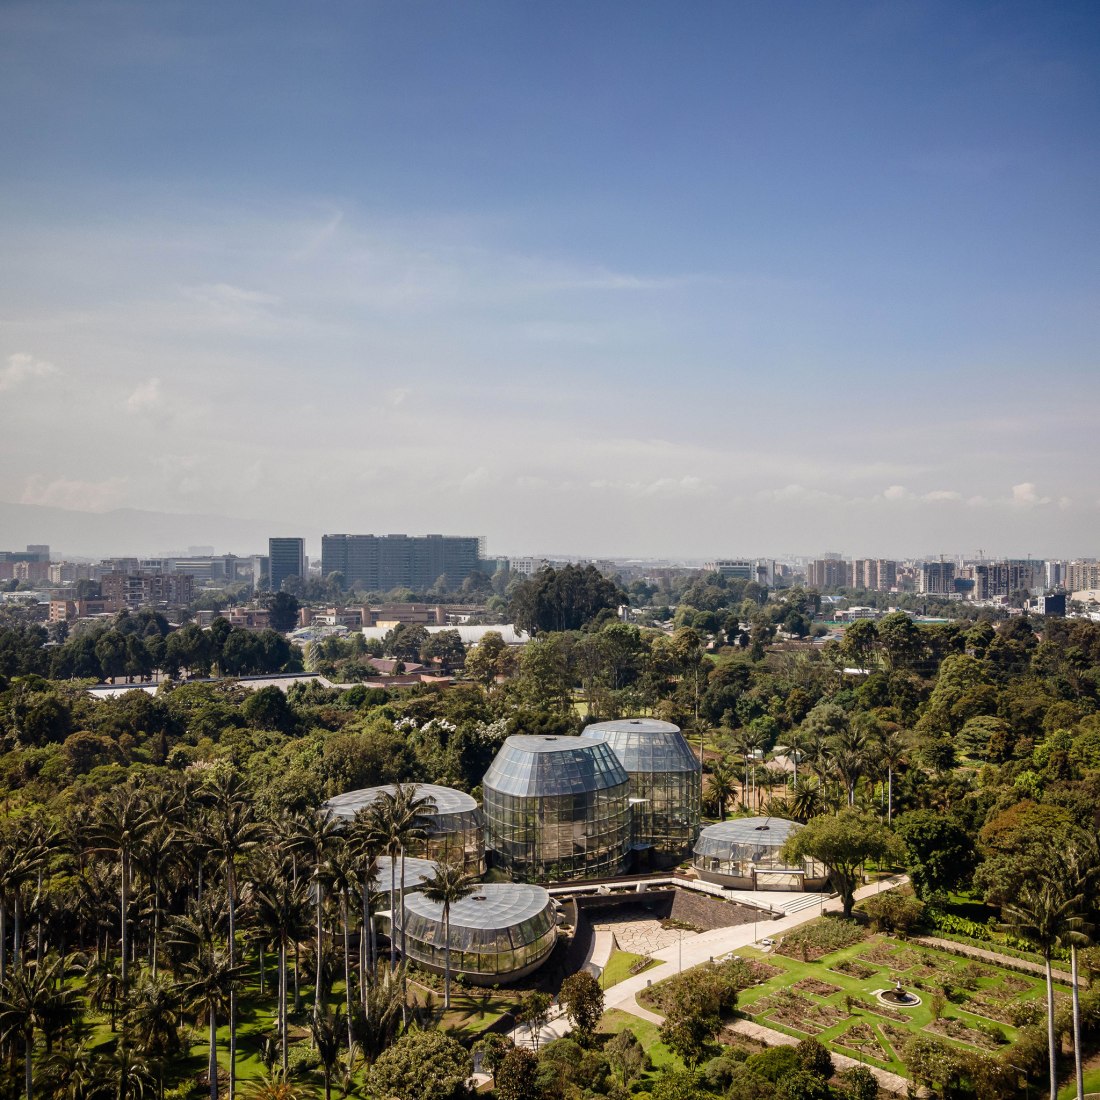 Tropicario of the Botanical Garden of Bogotá by DARP. Photograph by Mauricio Carvajal